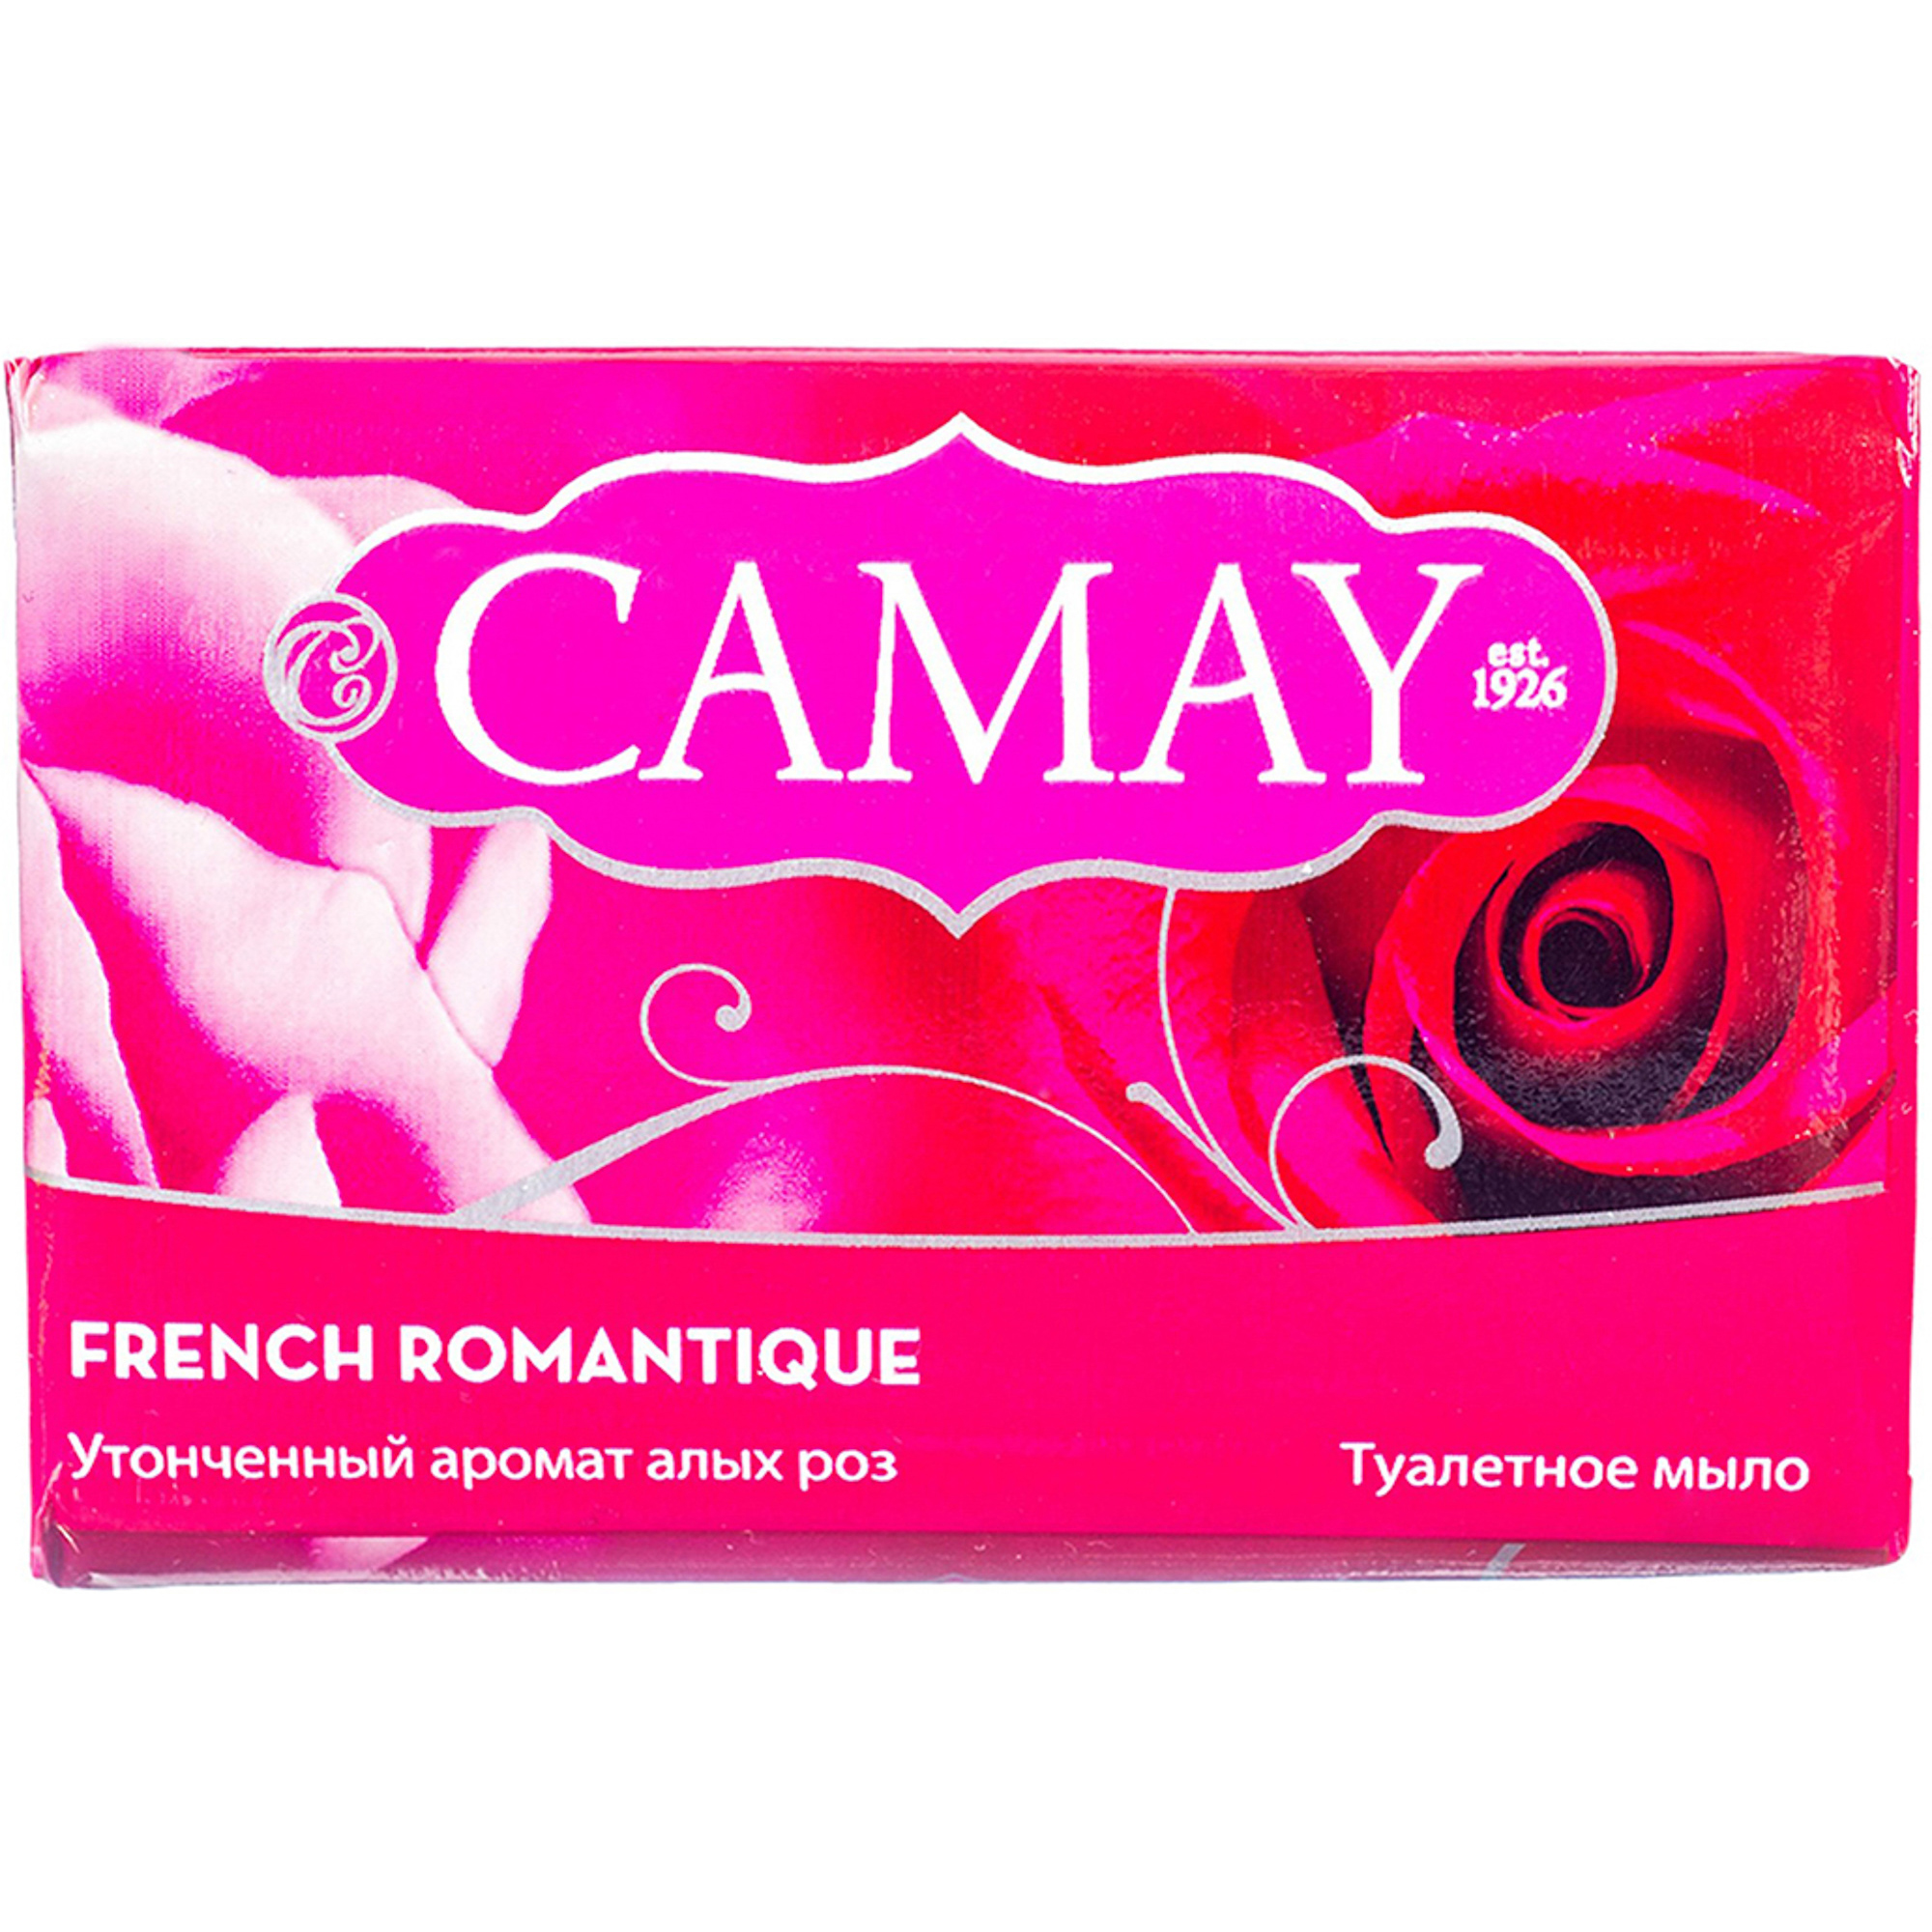 цена Мыло Camay French Romantique 85 г